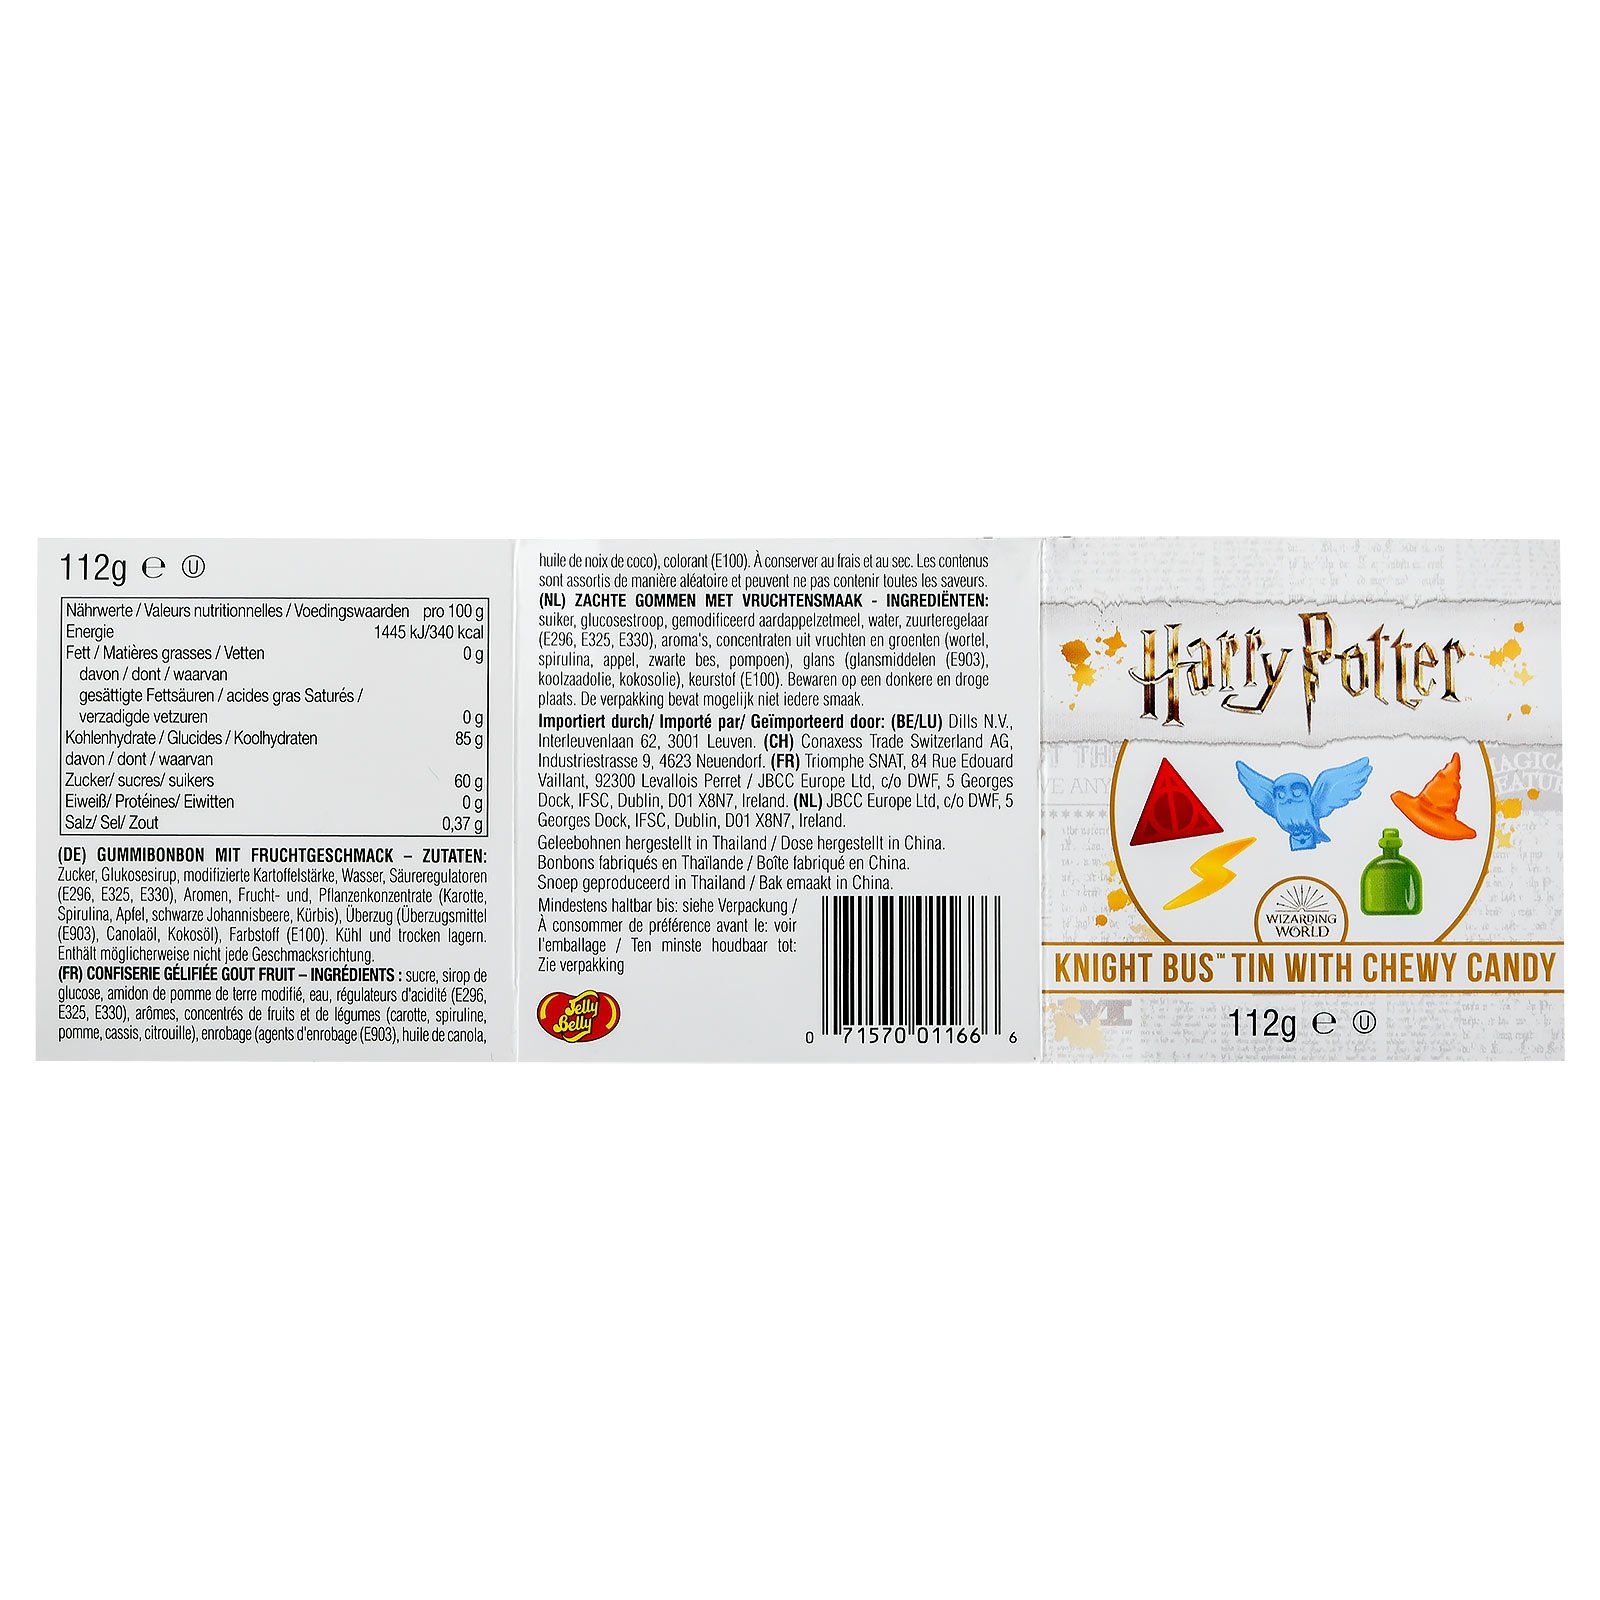 Harry Potter - Knight Bus Fruit Gum Tin